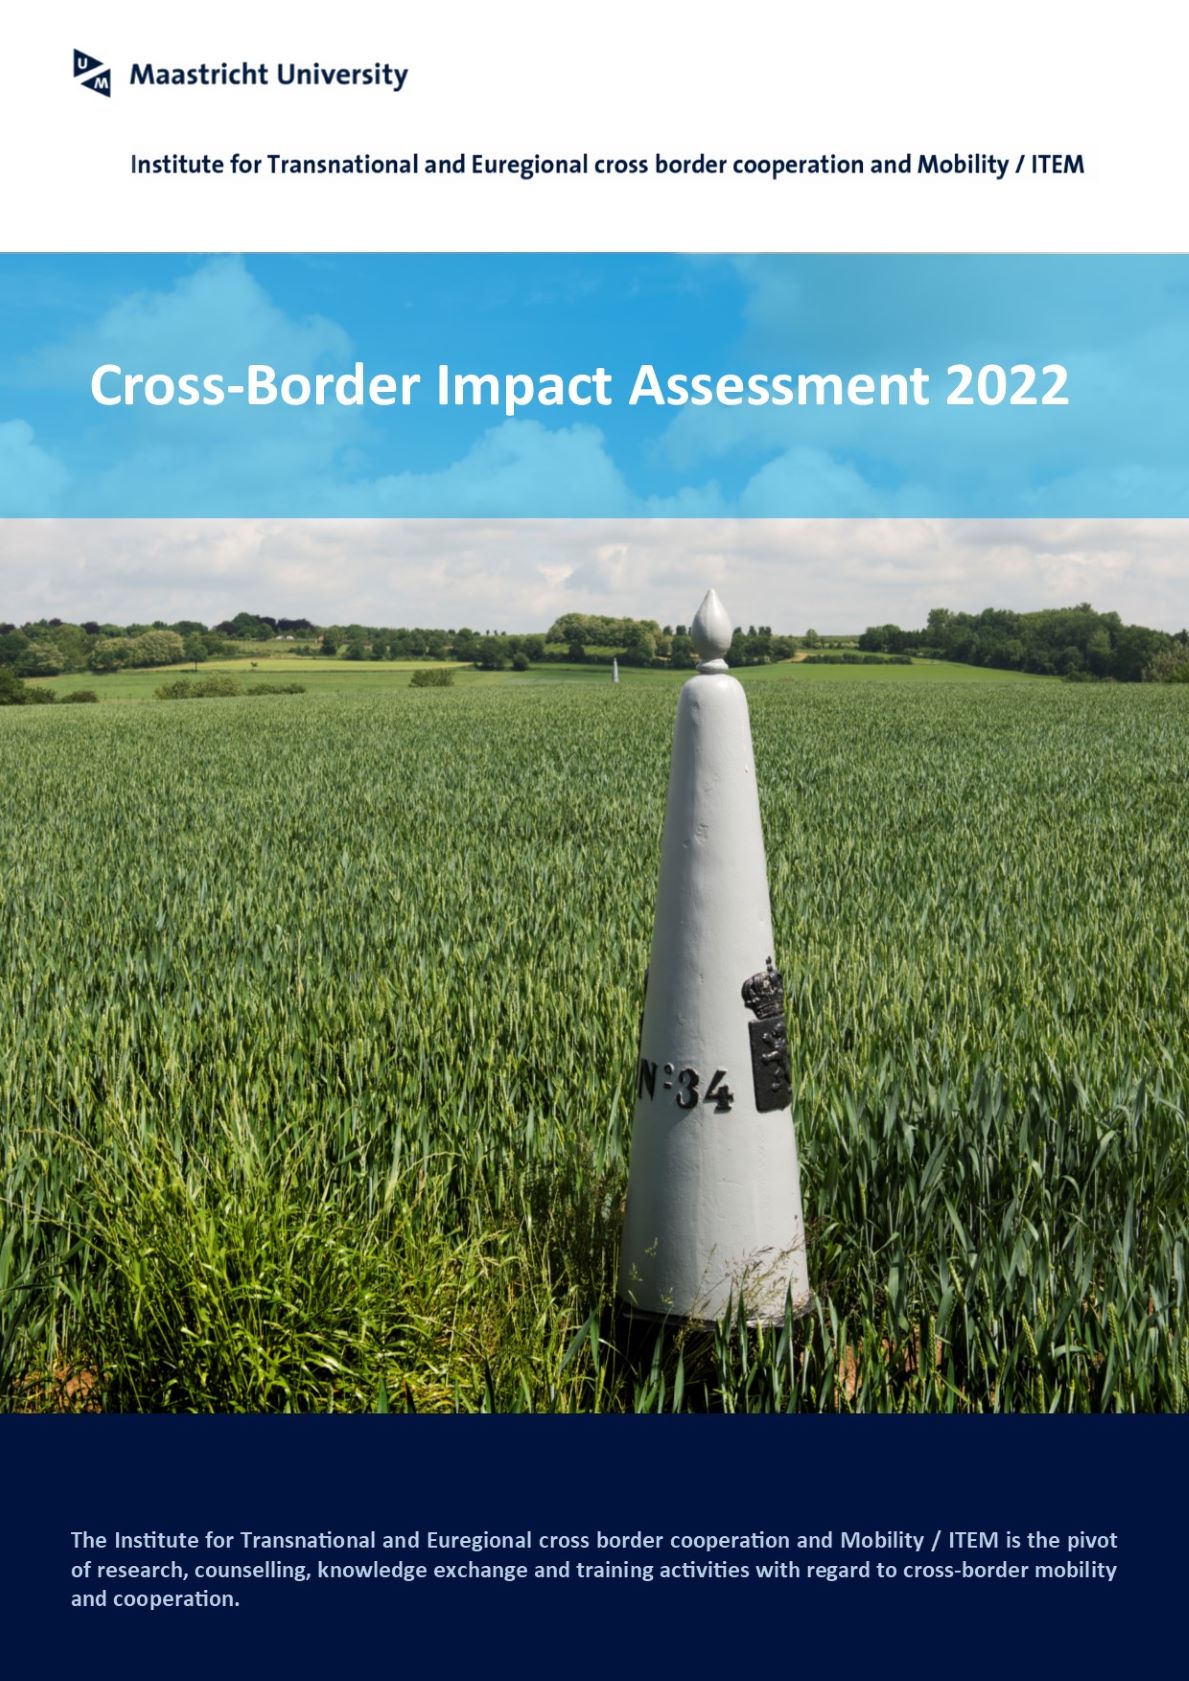 Cross-Border Impact Assessment 2022: Topics announced